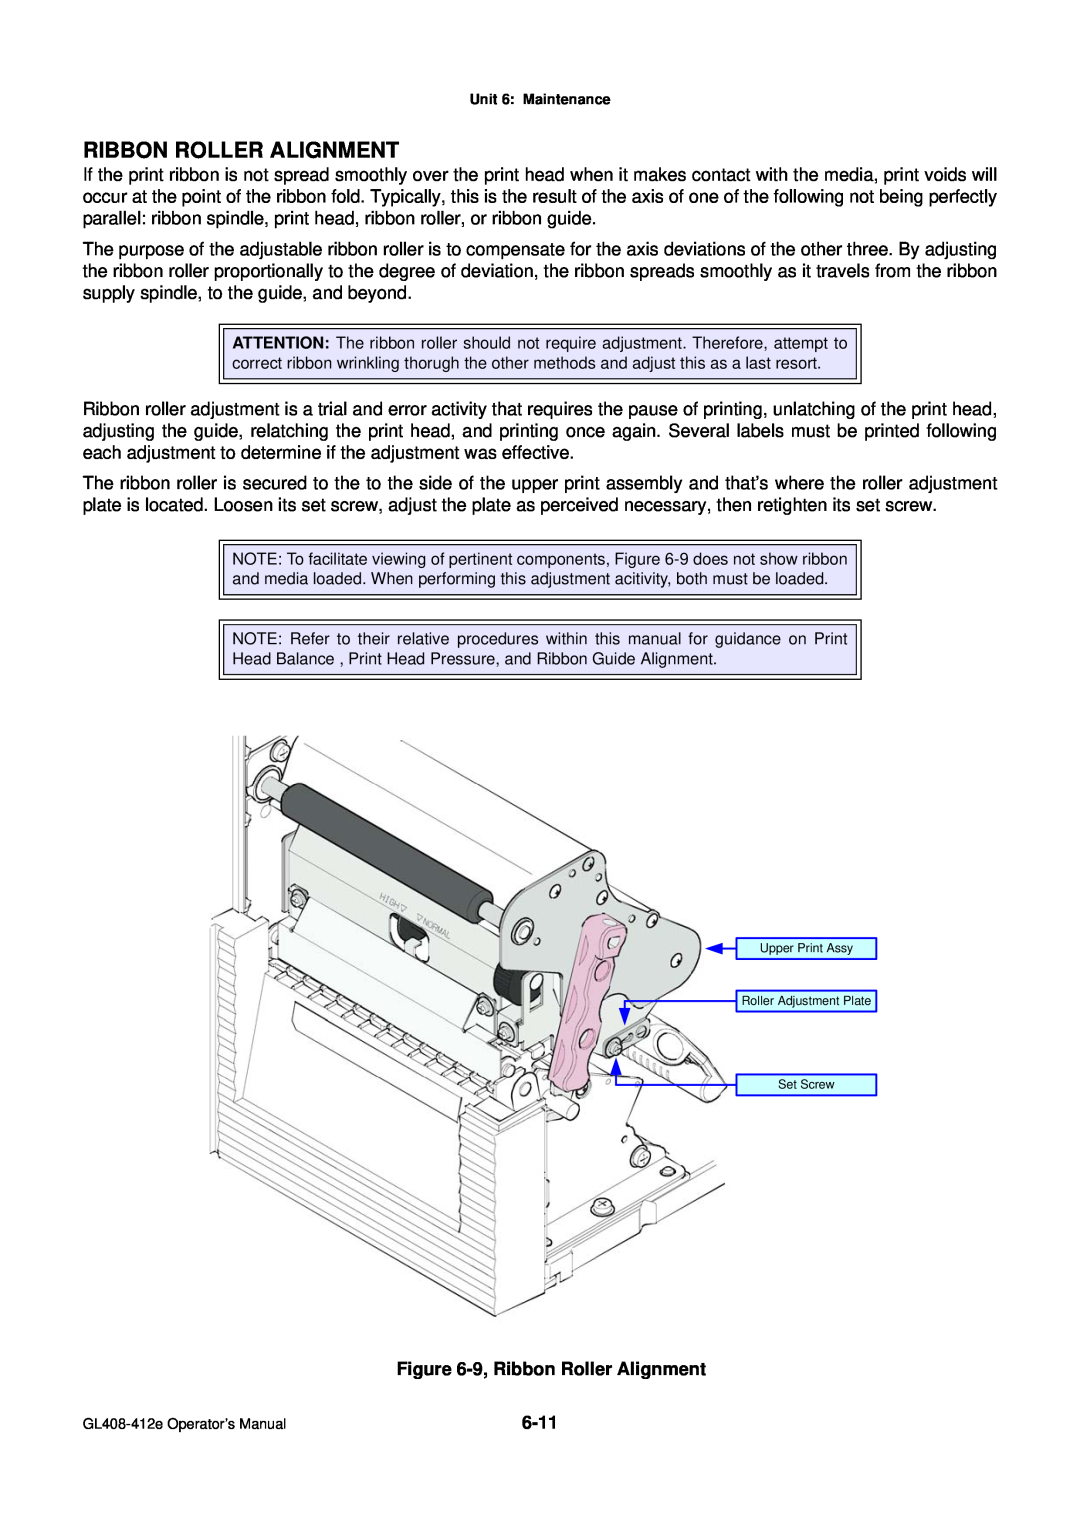 SATO GL4XXE manual 9, Ribbon Roller Alignment 6-11 